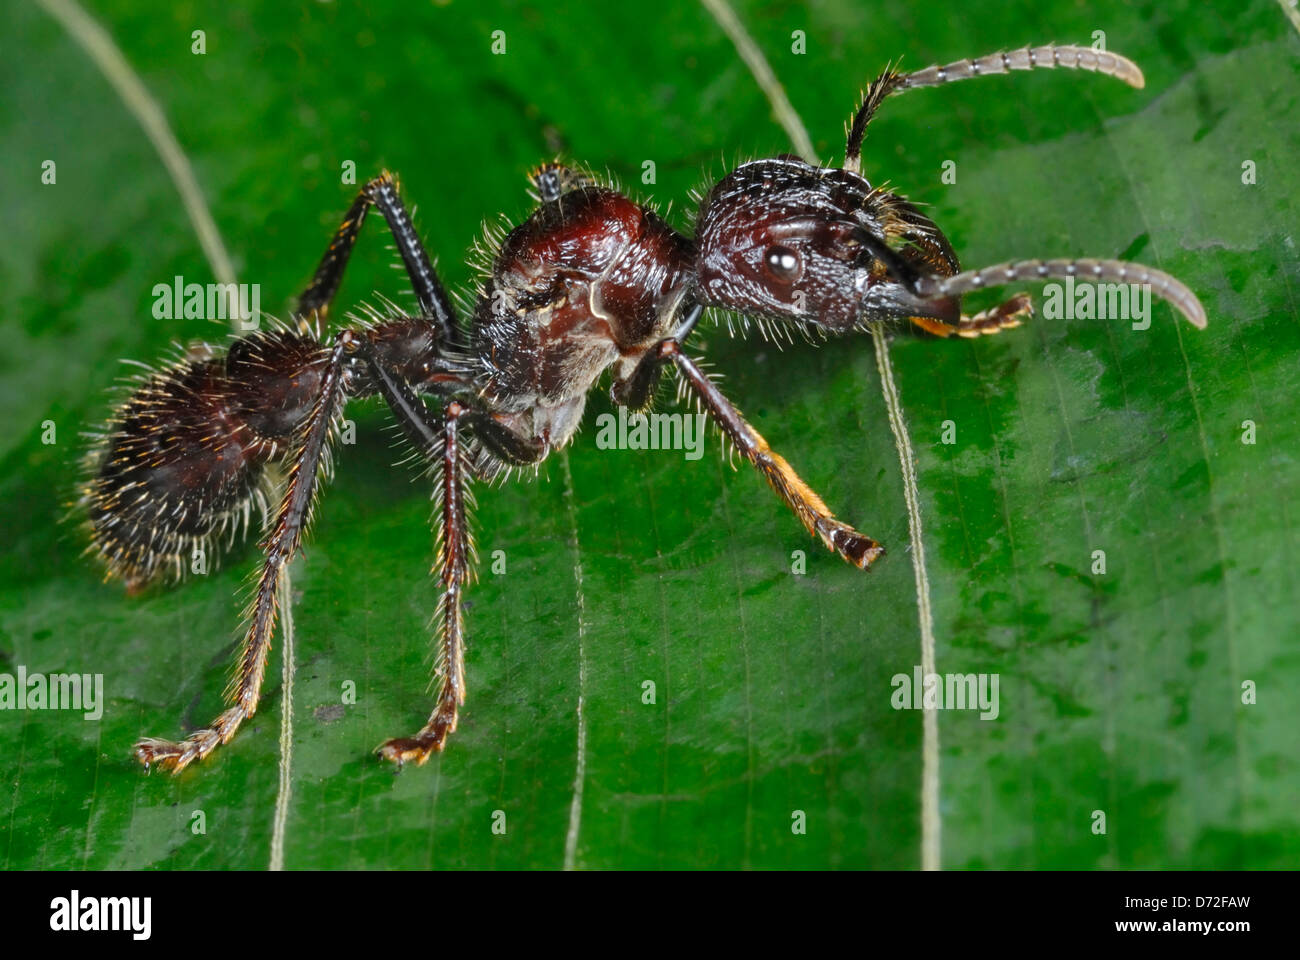 Enormous Bullet Ant (Paraponera clavata) in Costa Rica rainforest Stock Photo